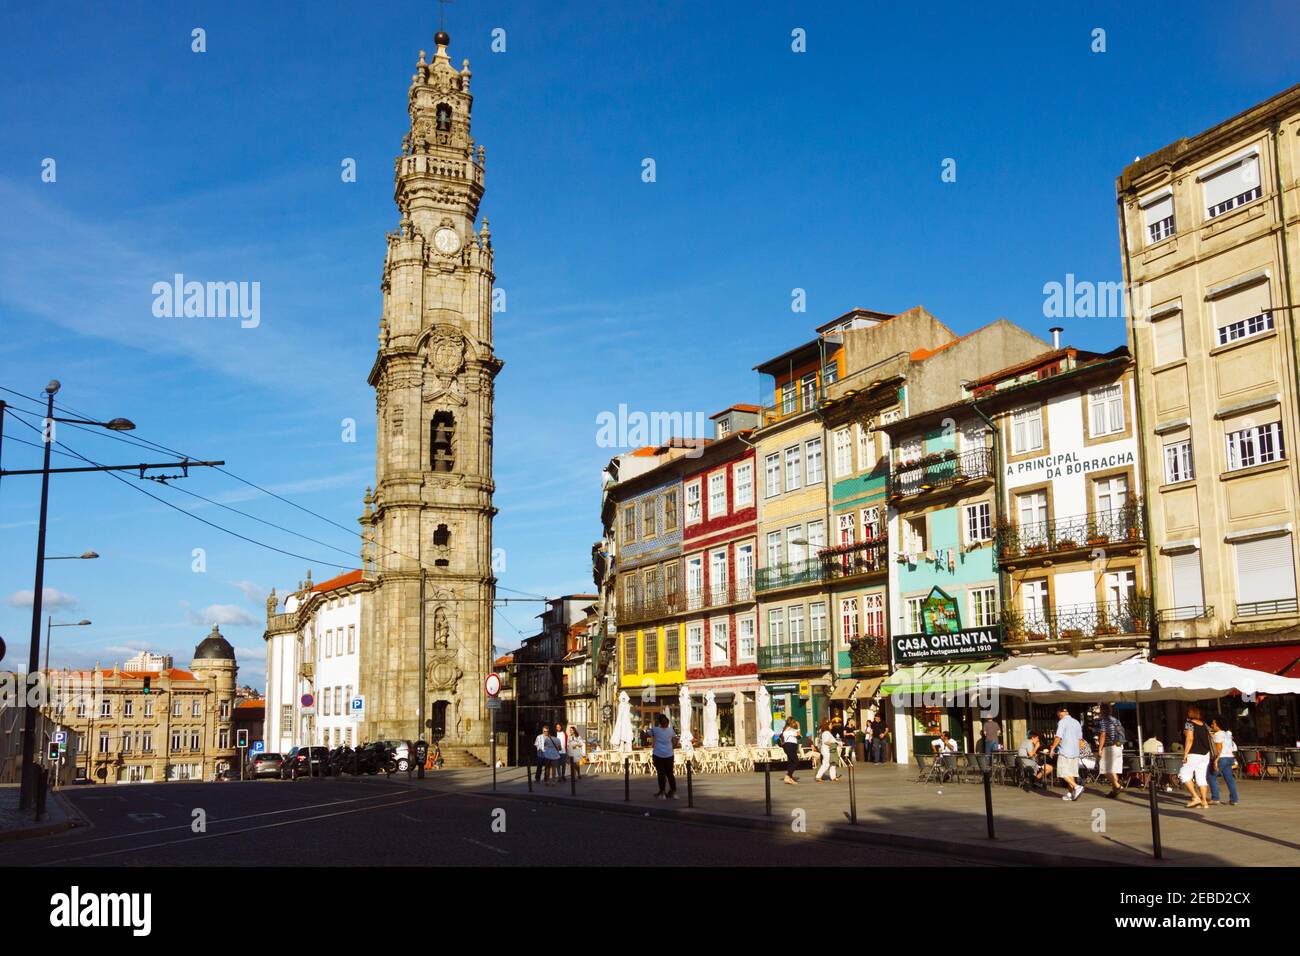 Porto, Portugal: Der Turm Torre dos Clérigos aus der Igreja dos Clérigos Kirche des italienischen Architekten Nicolau Nasoni im Stil des Barock. Stockfoto